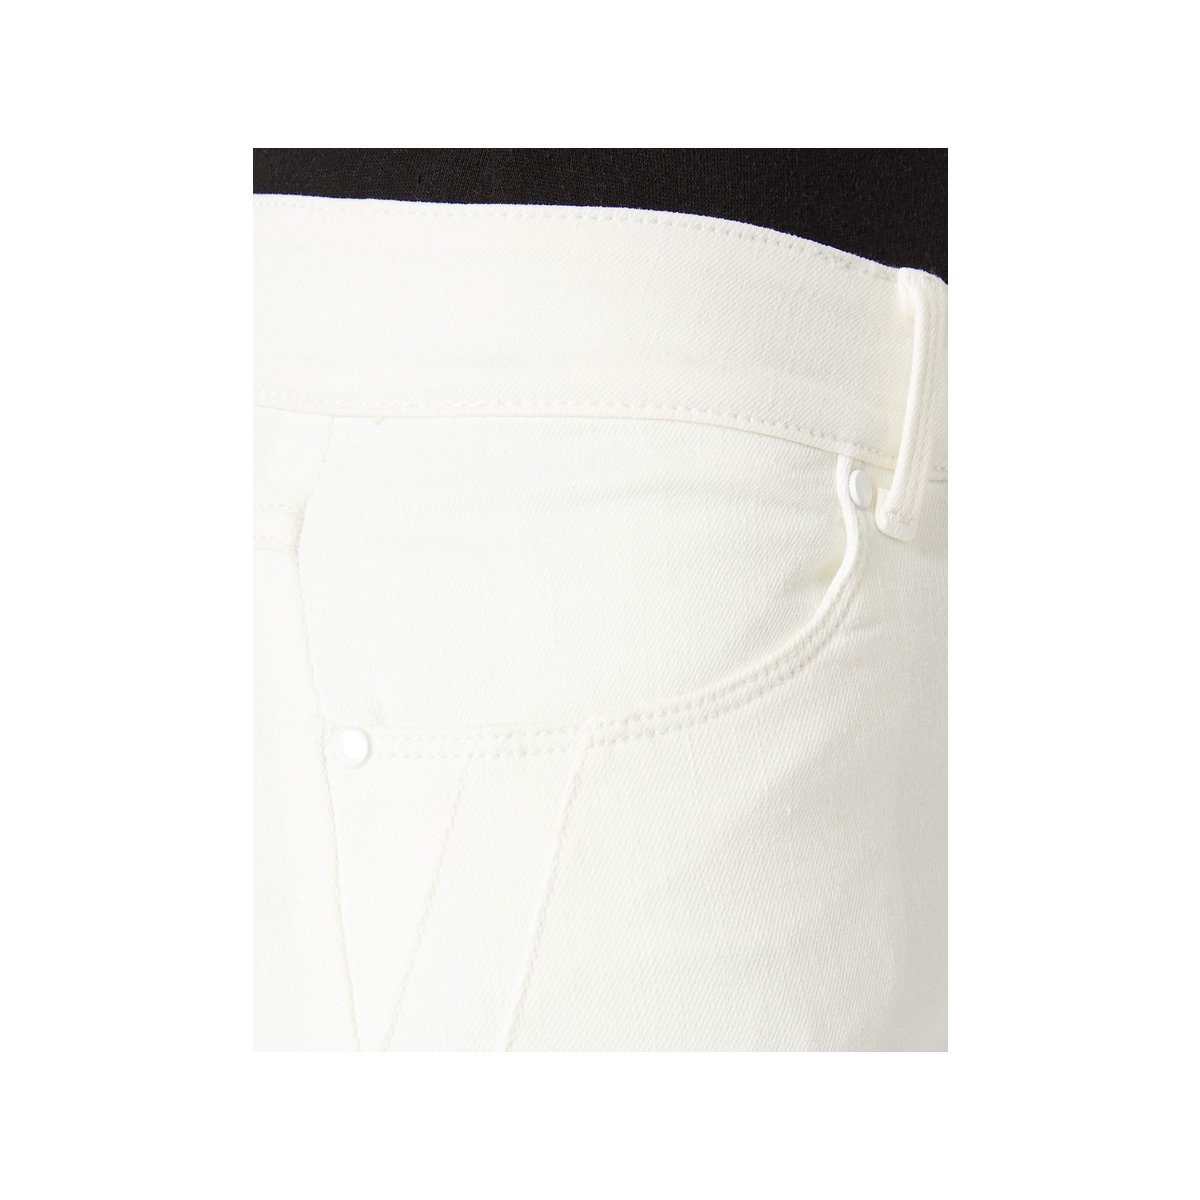 uni Brax (1-tlg) 5-Pocket-Jeans